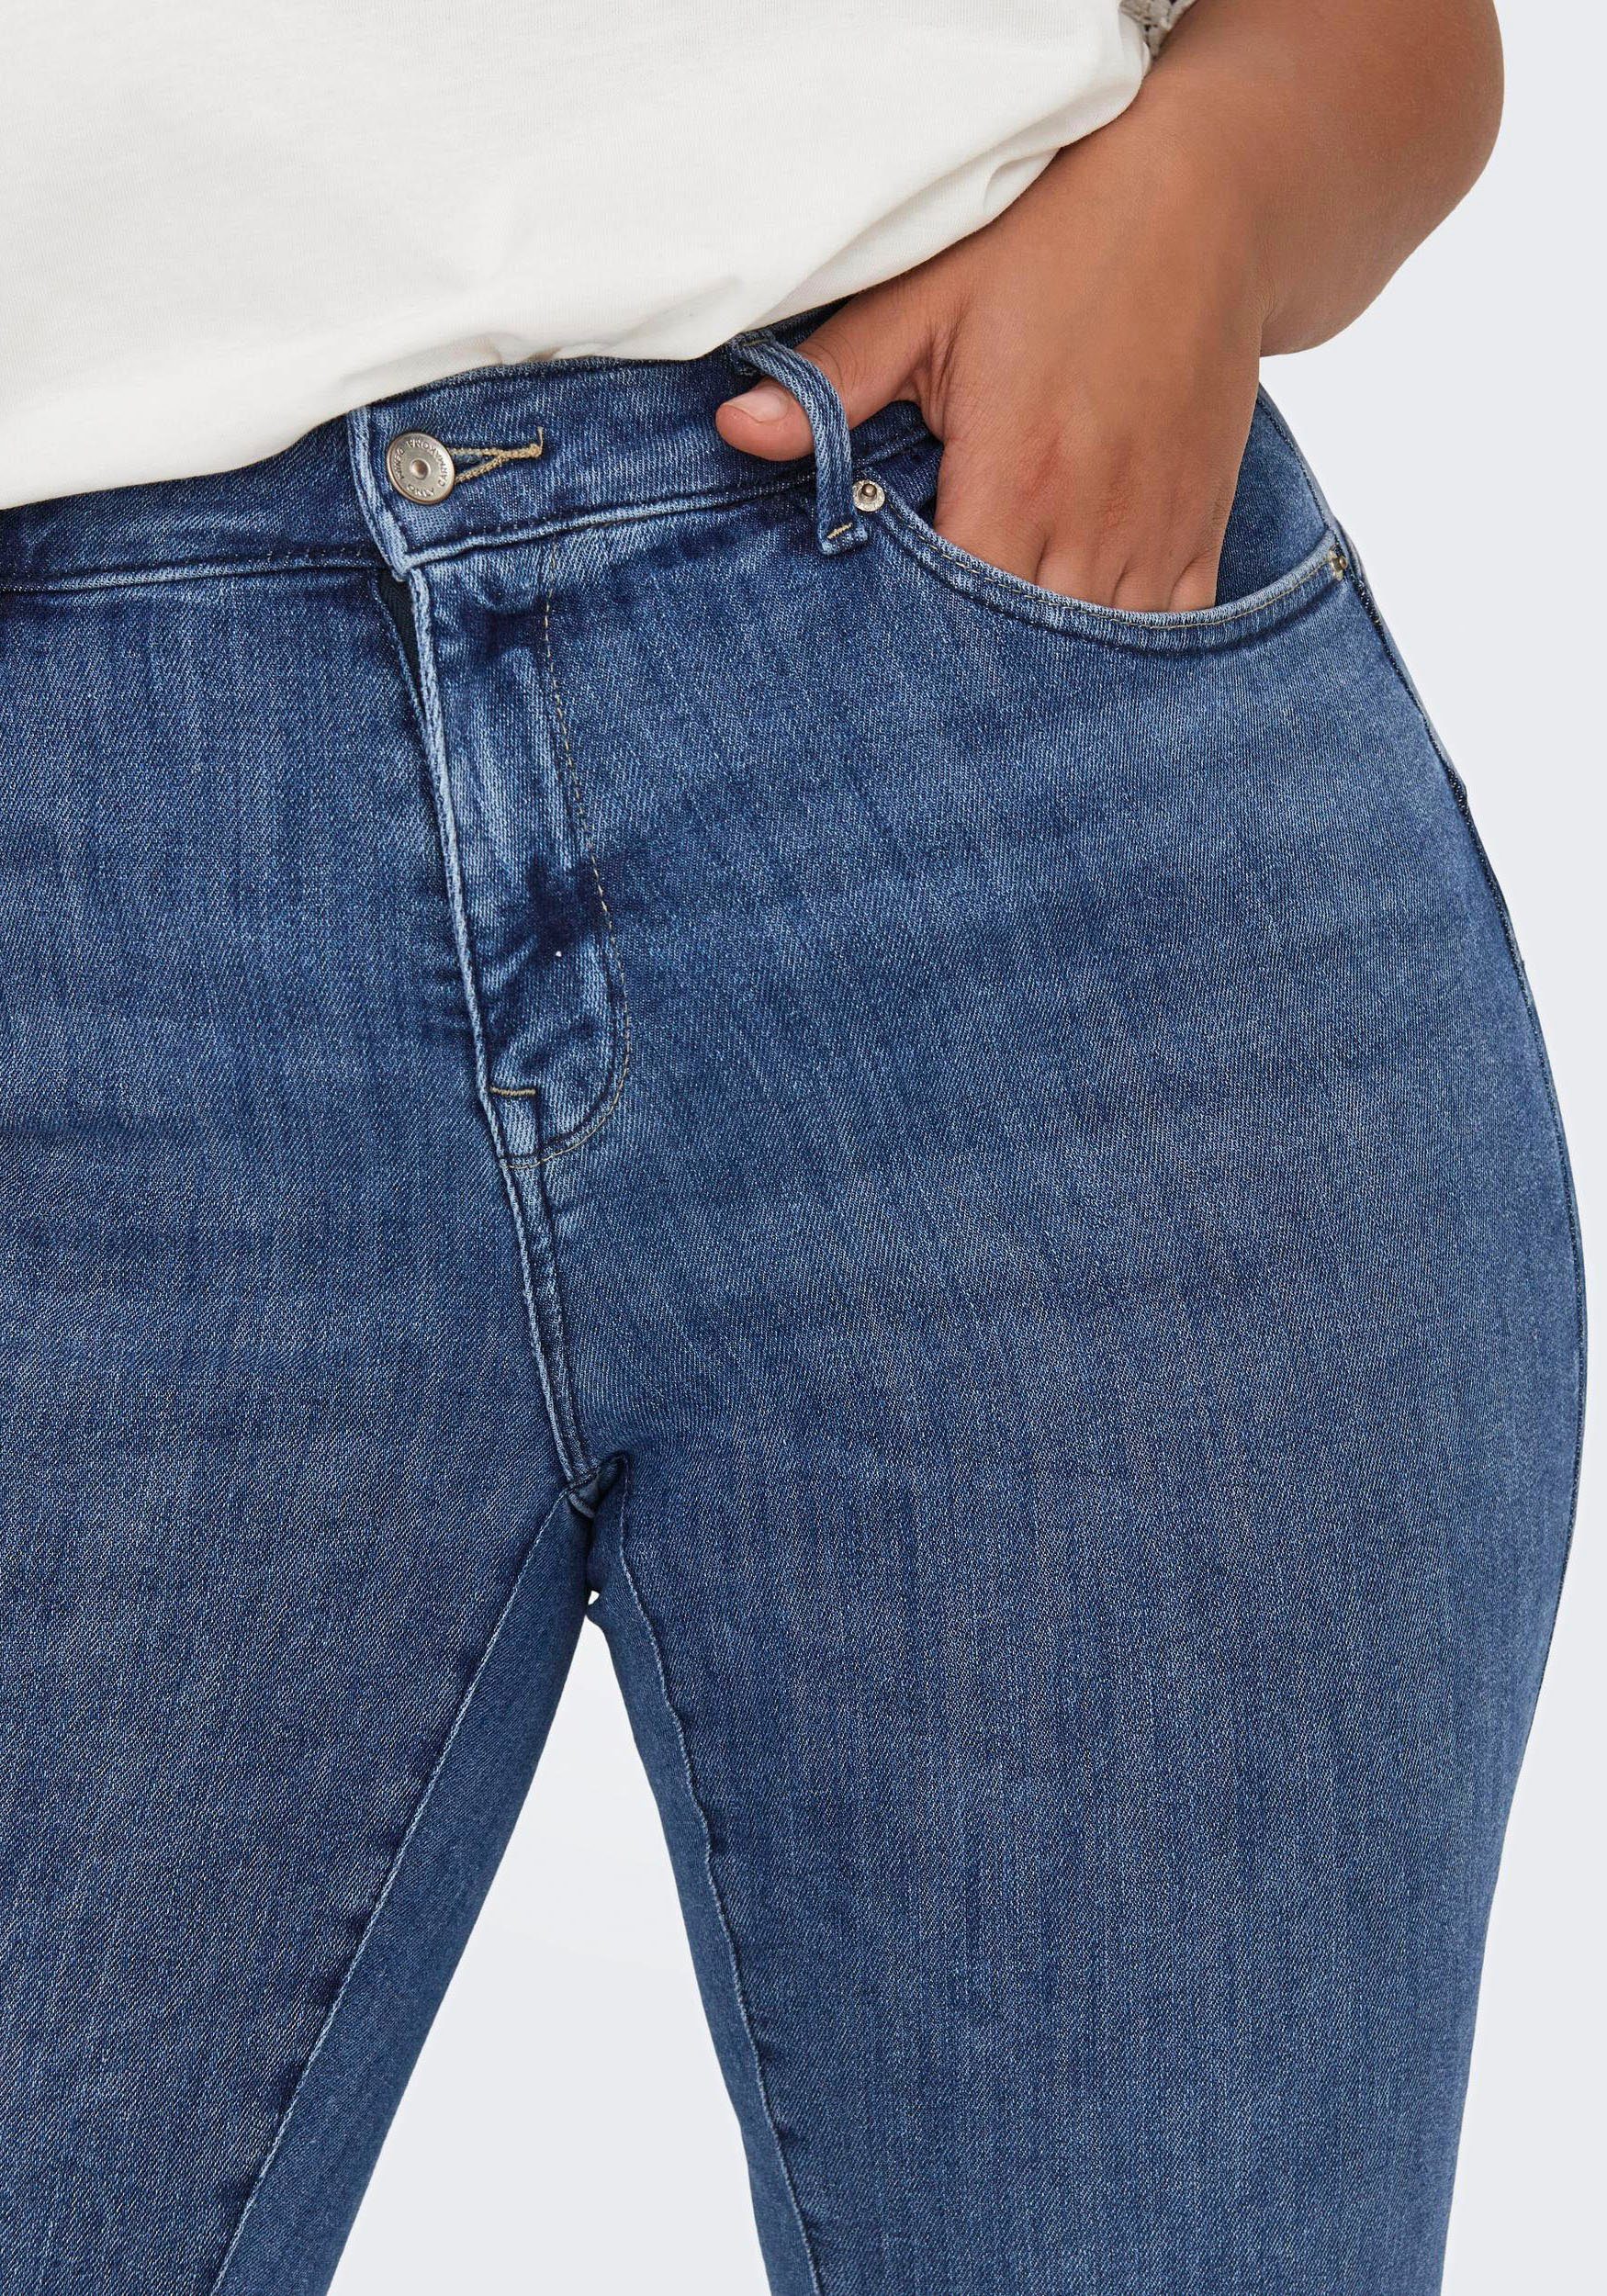 Vero ONLY PUSH REA2981 CARMAKOMA Skinny-fit-Jeans MID NOOS CARPOWER UP Moda SKINNY